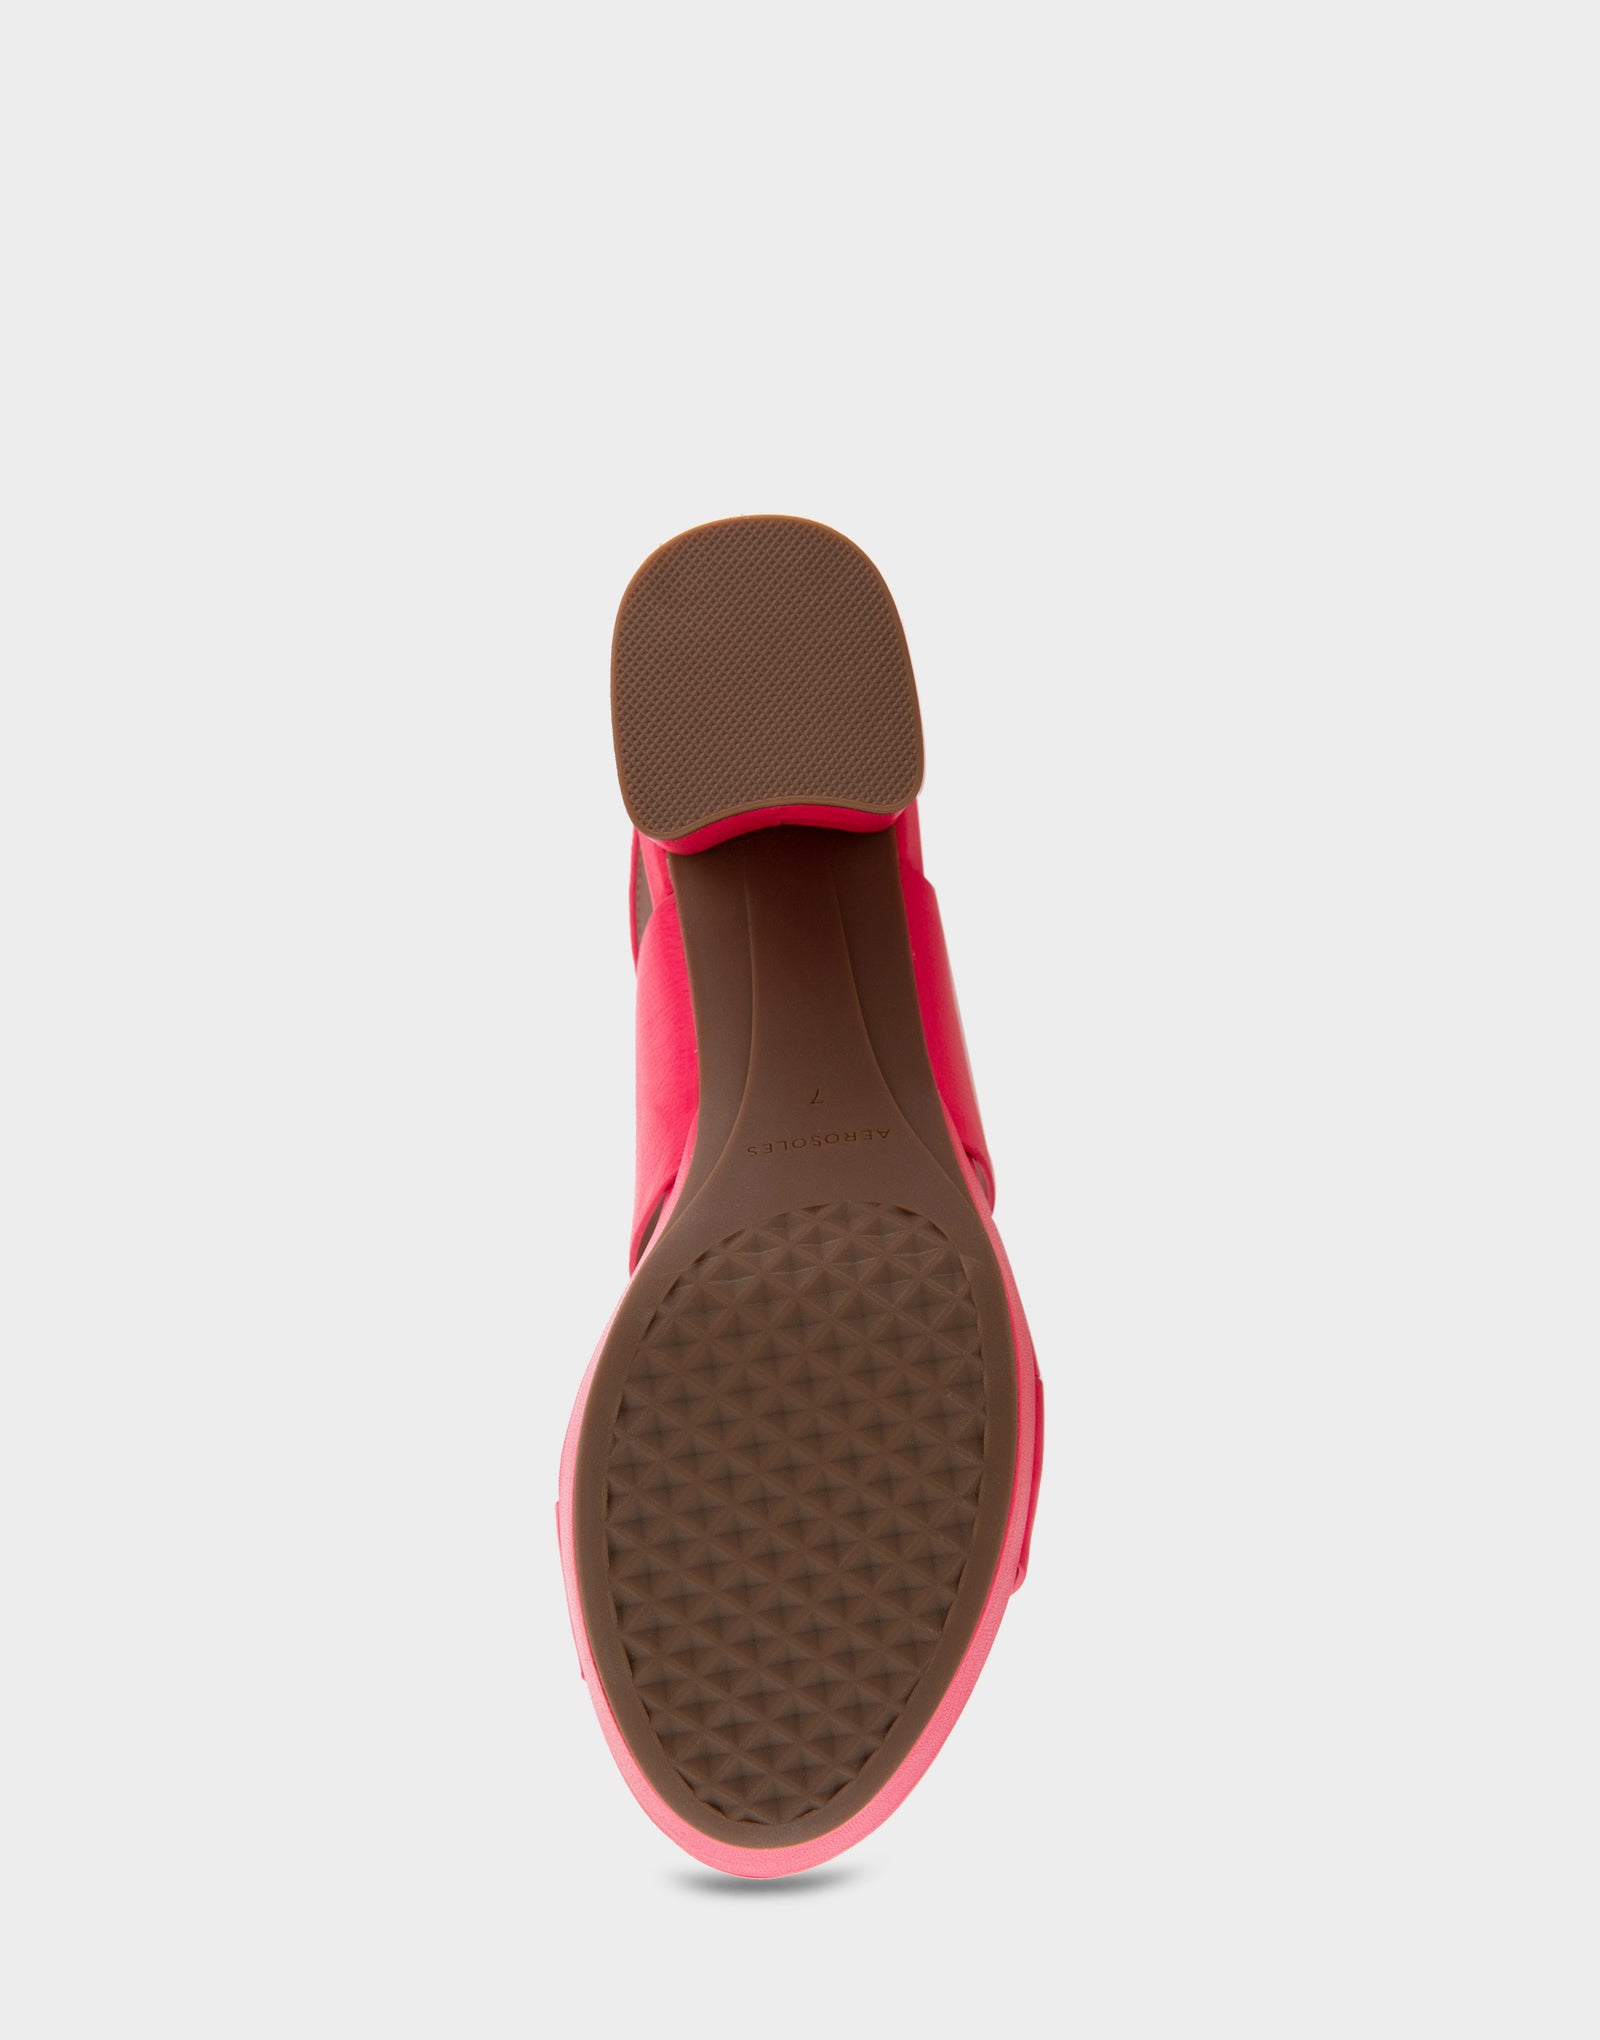 Women's Platform Sandal in Virtual Pink Leather